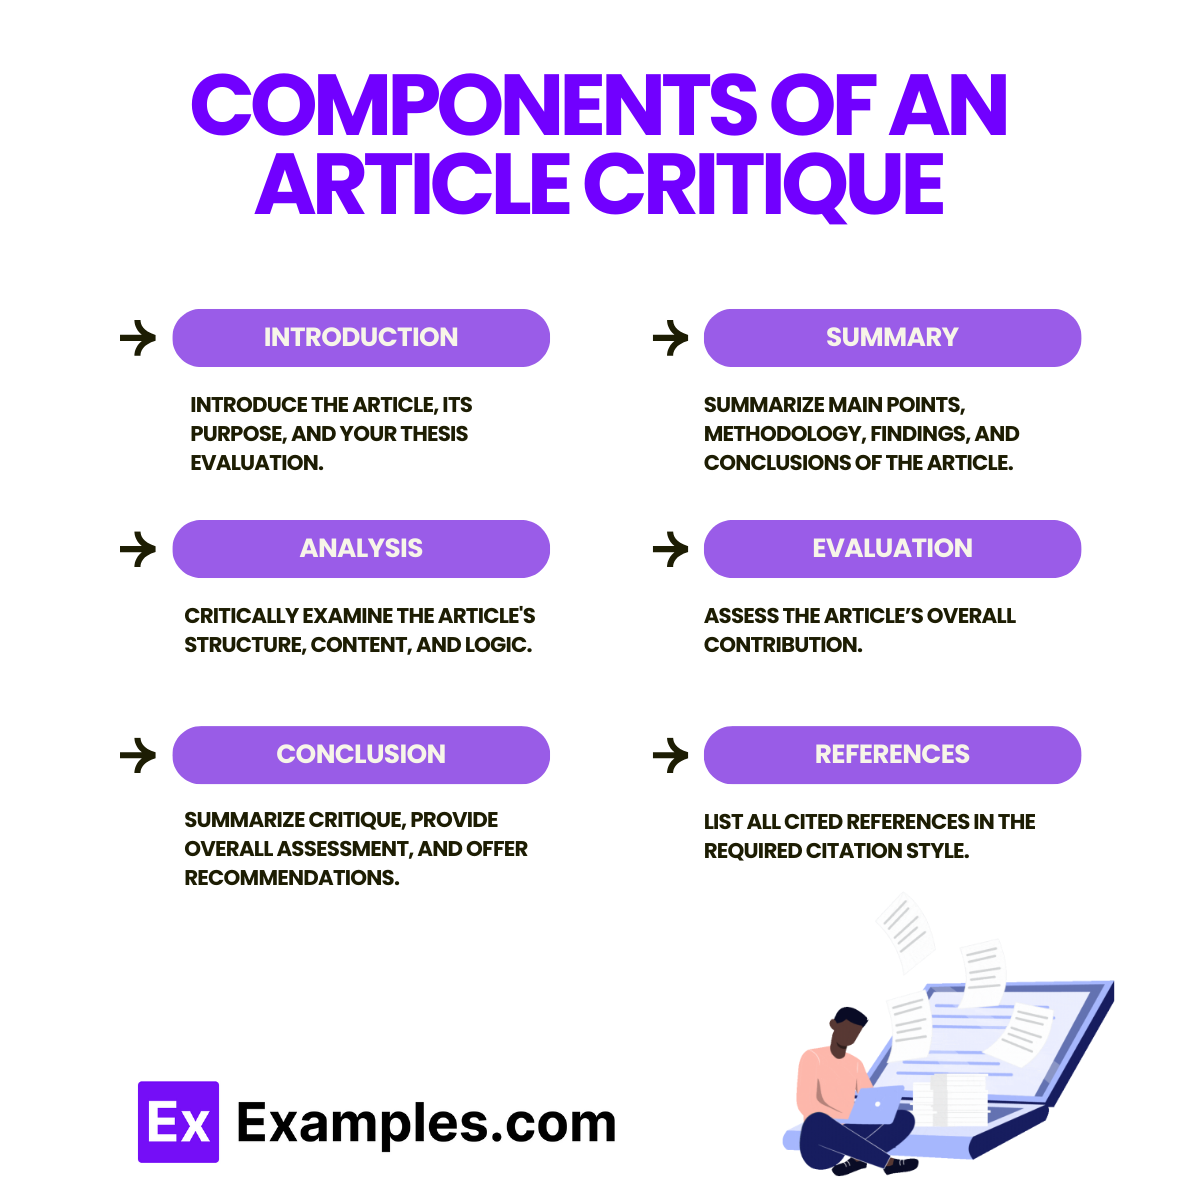 Components of an Article Critique